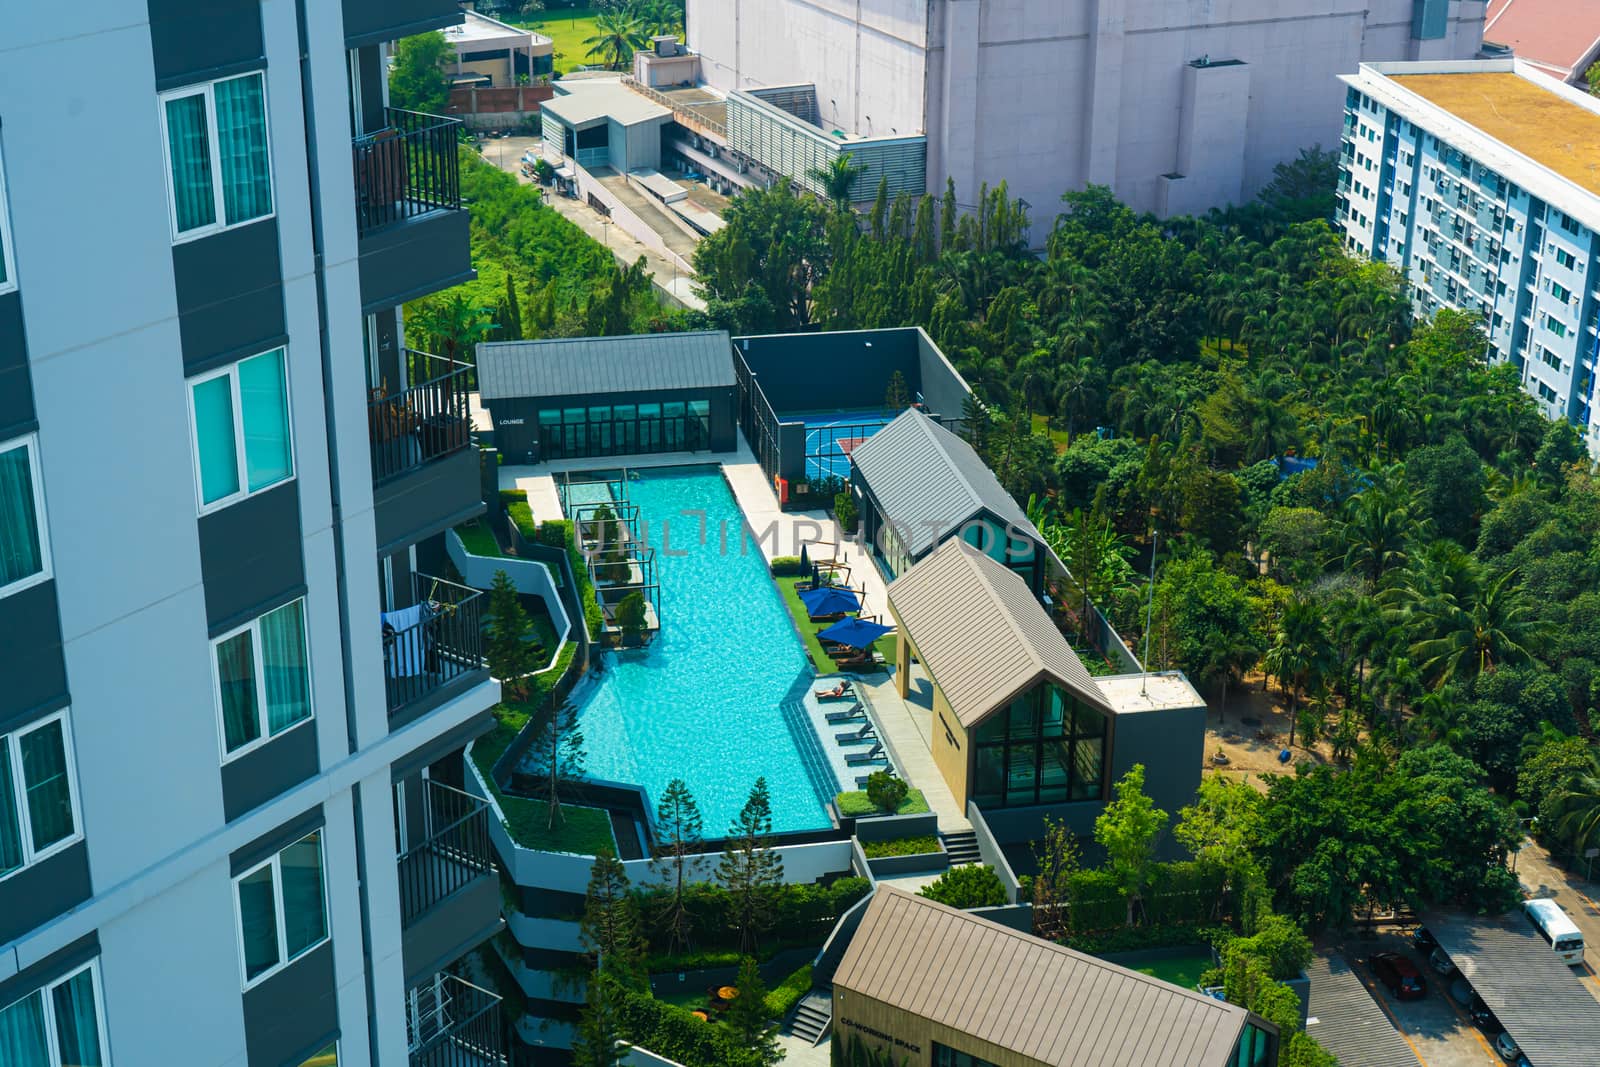 Condominium in Bangkok. Modern accommodation with facilities and pool